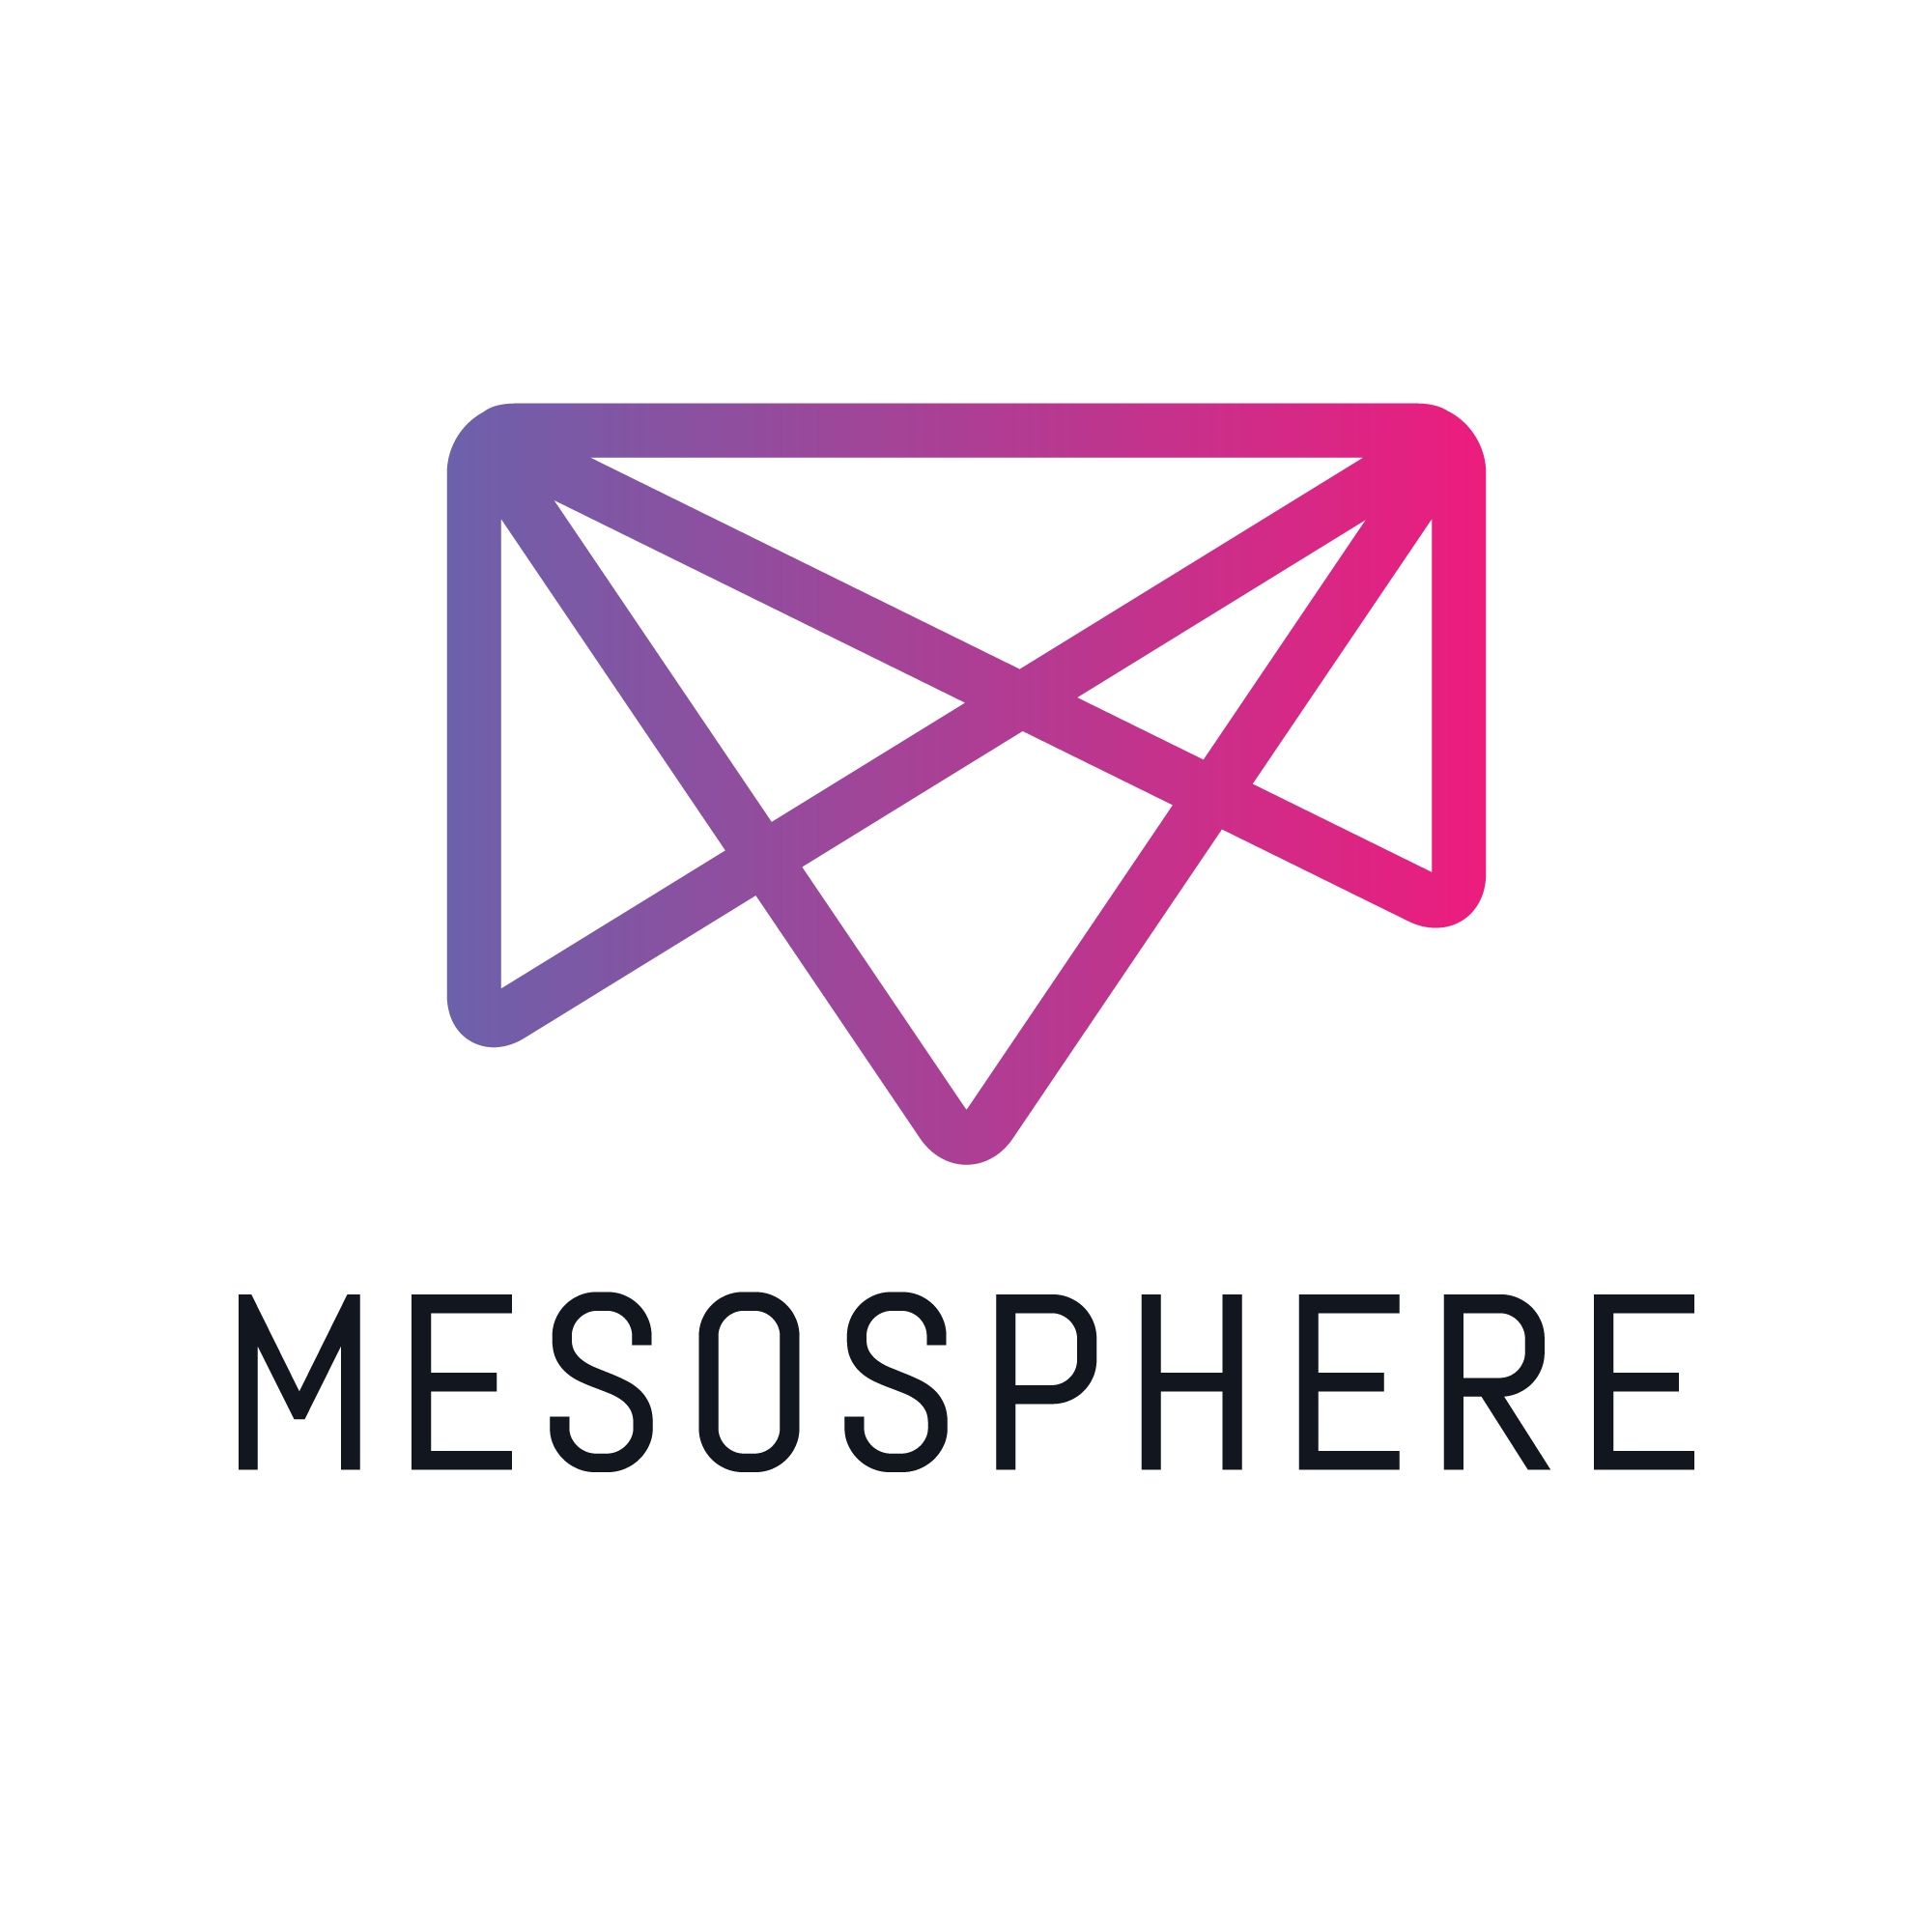 Mesosphere